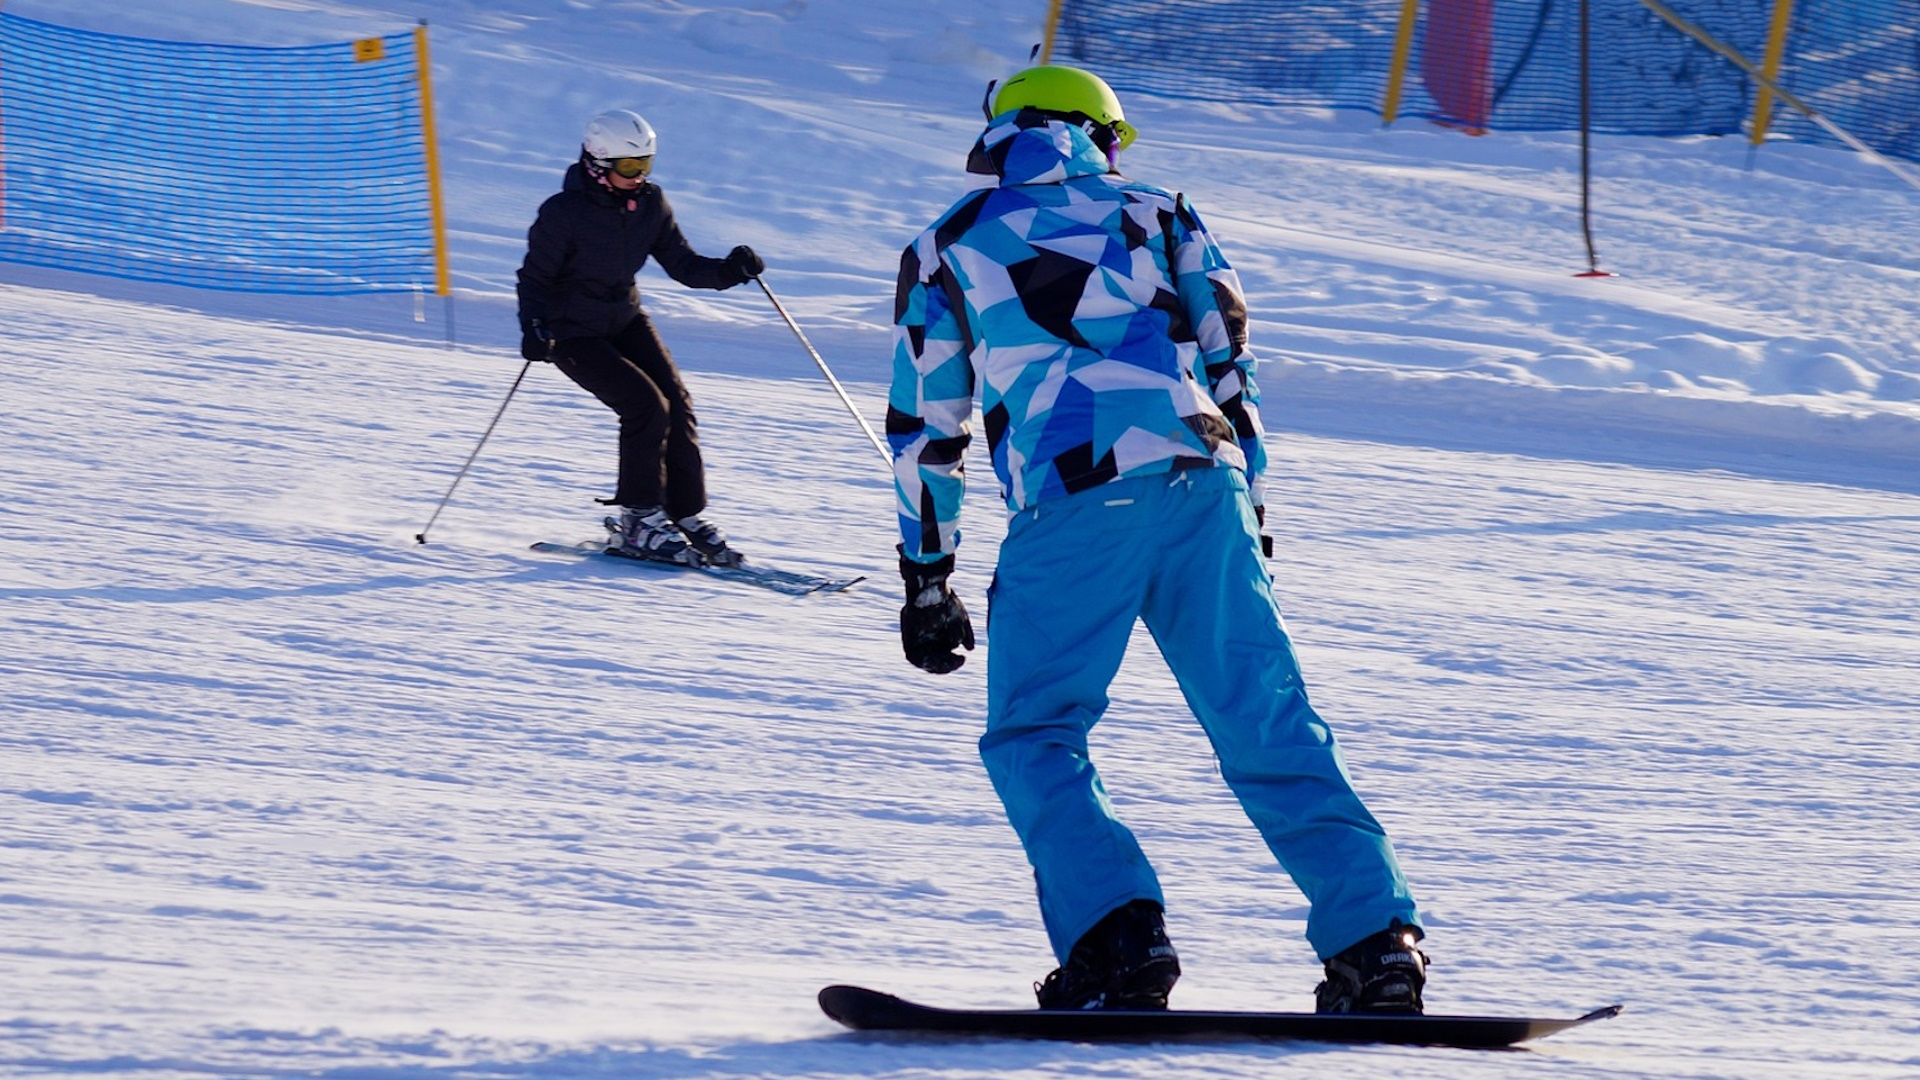 Xscape Yorkshire - Ski and Snowboard